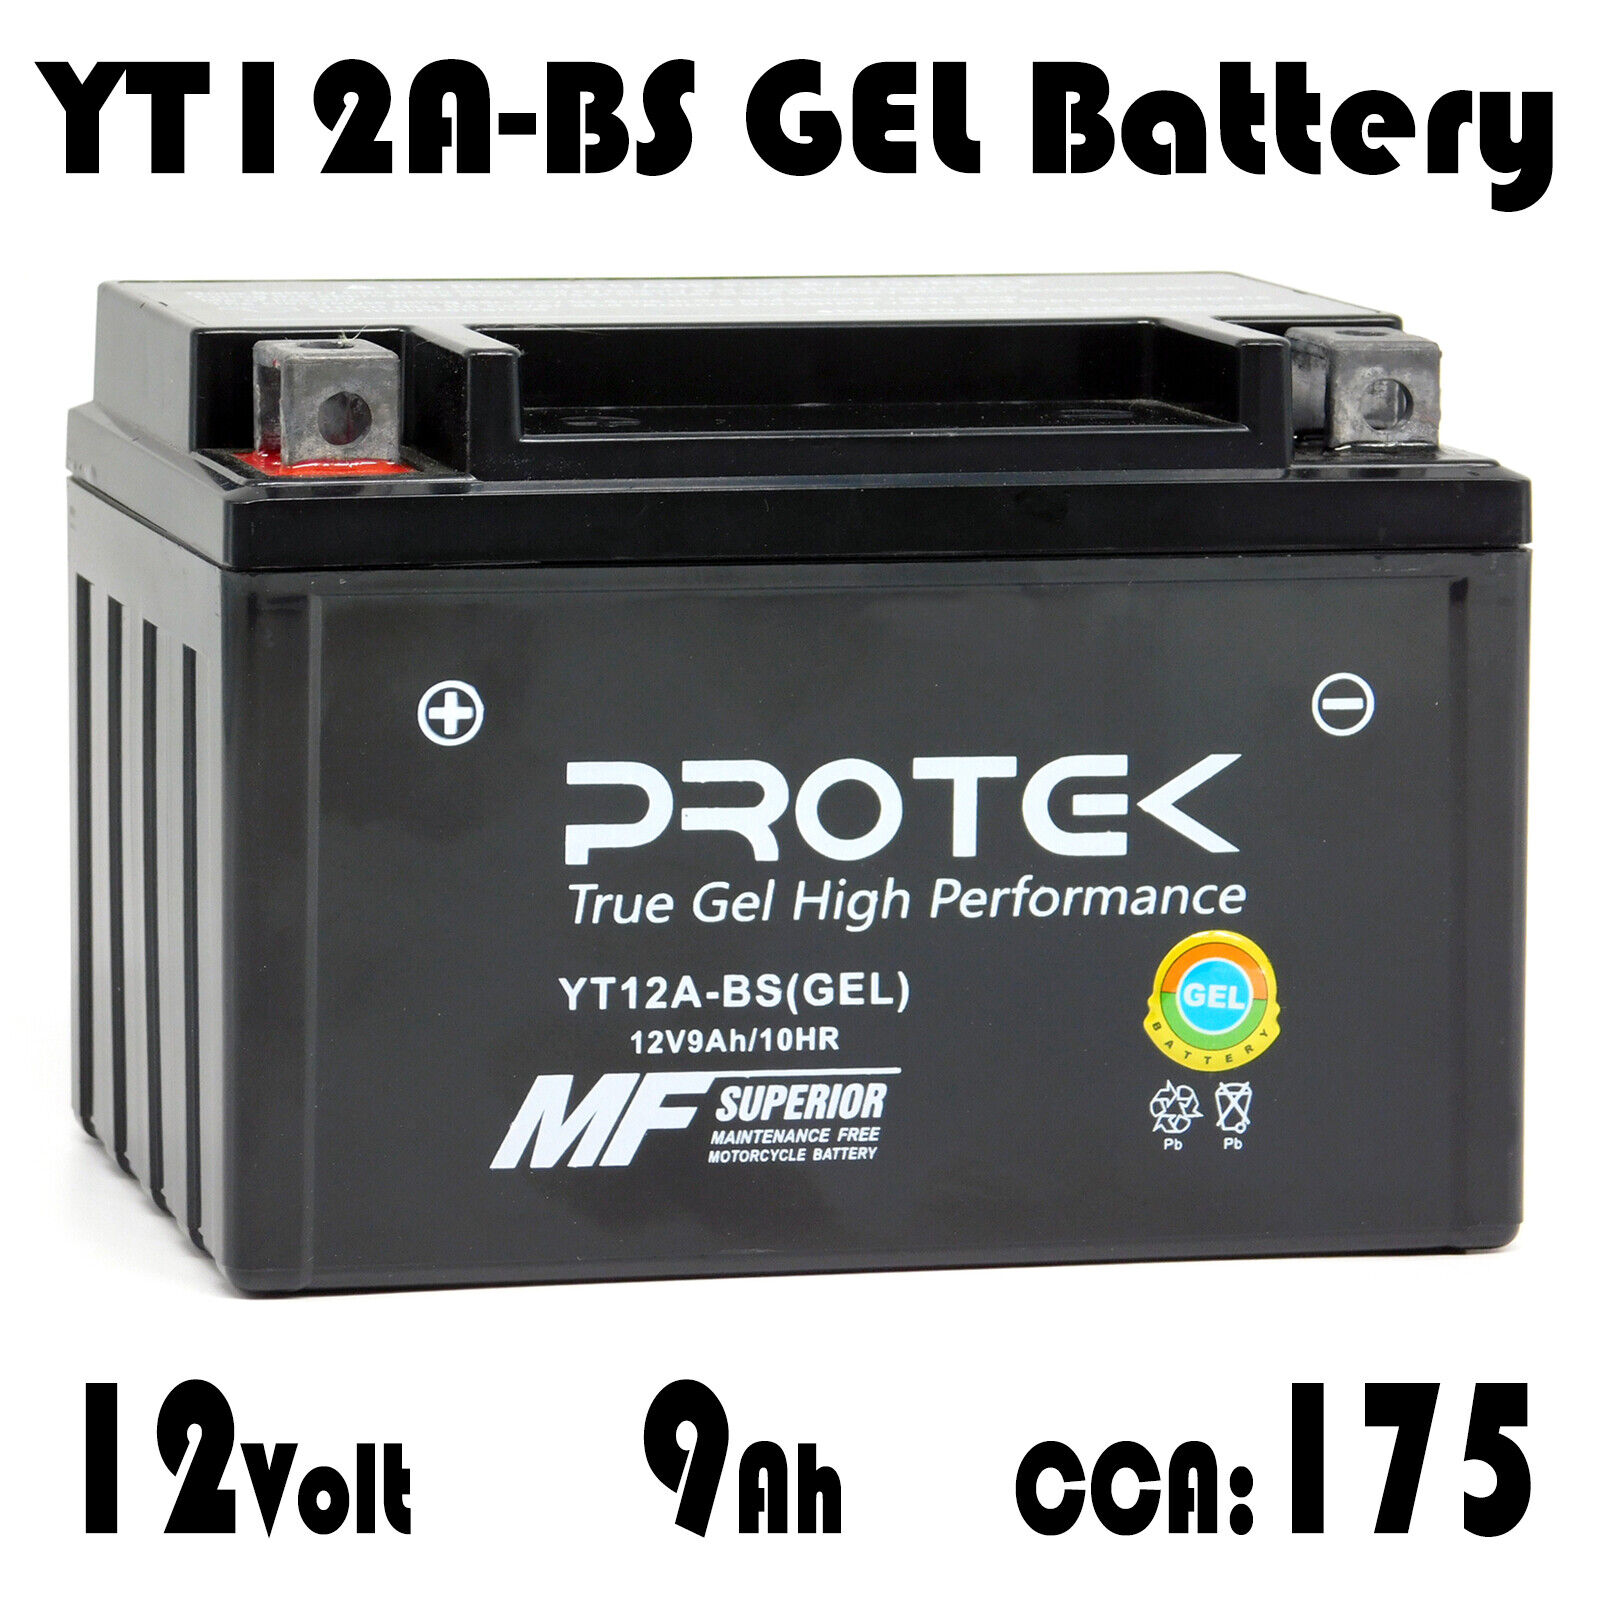 12V 9Ah YT12A-BS Gel Battery for 1999-2007 Suzuki Hayabusa GSX1300R SV650 SFV650